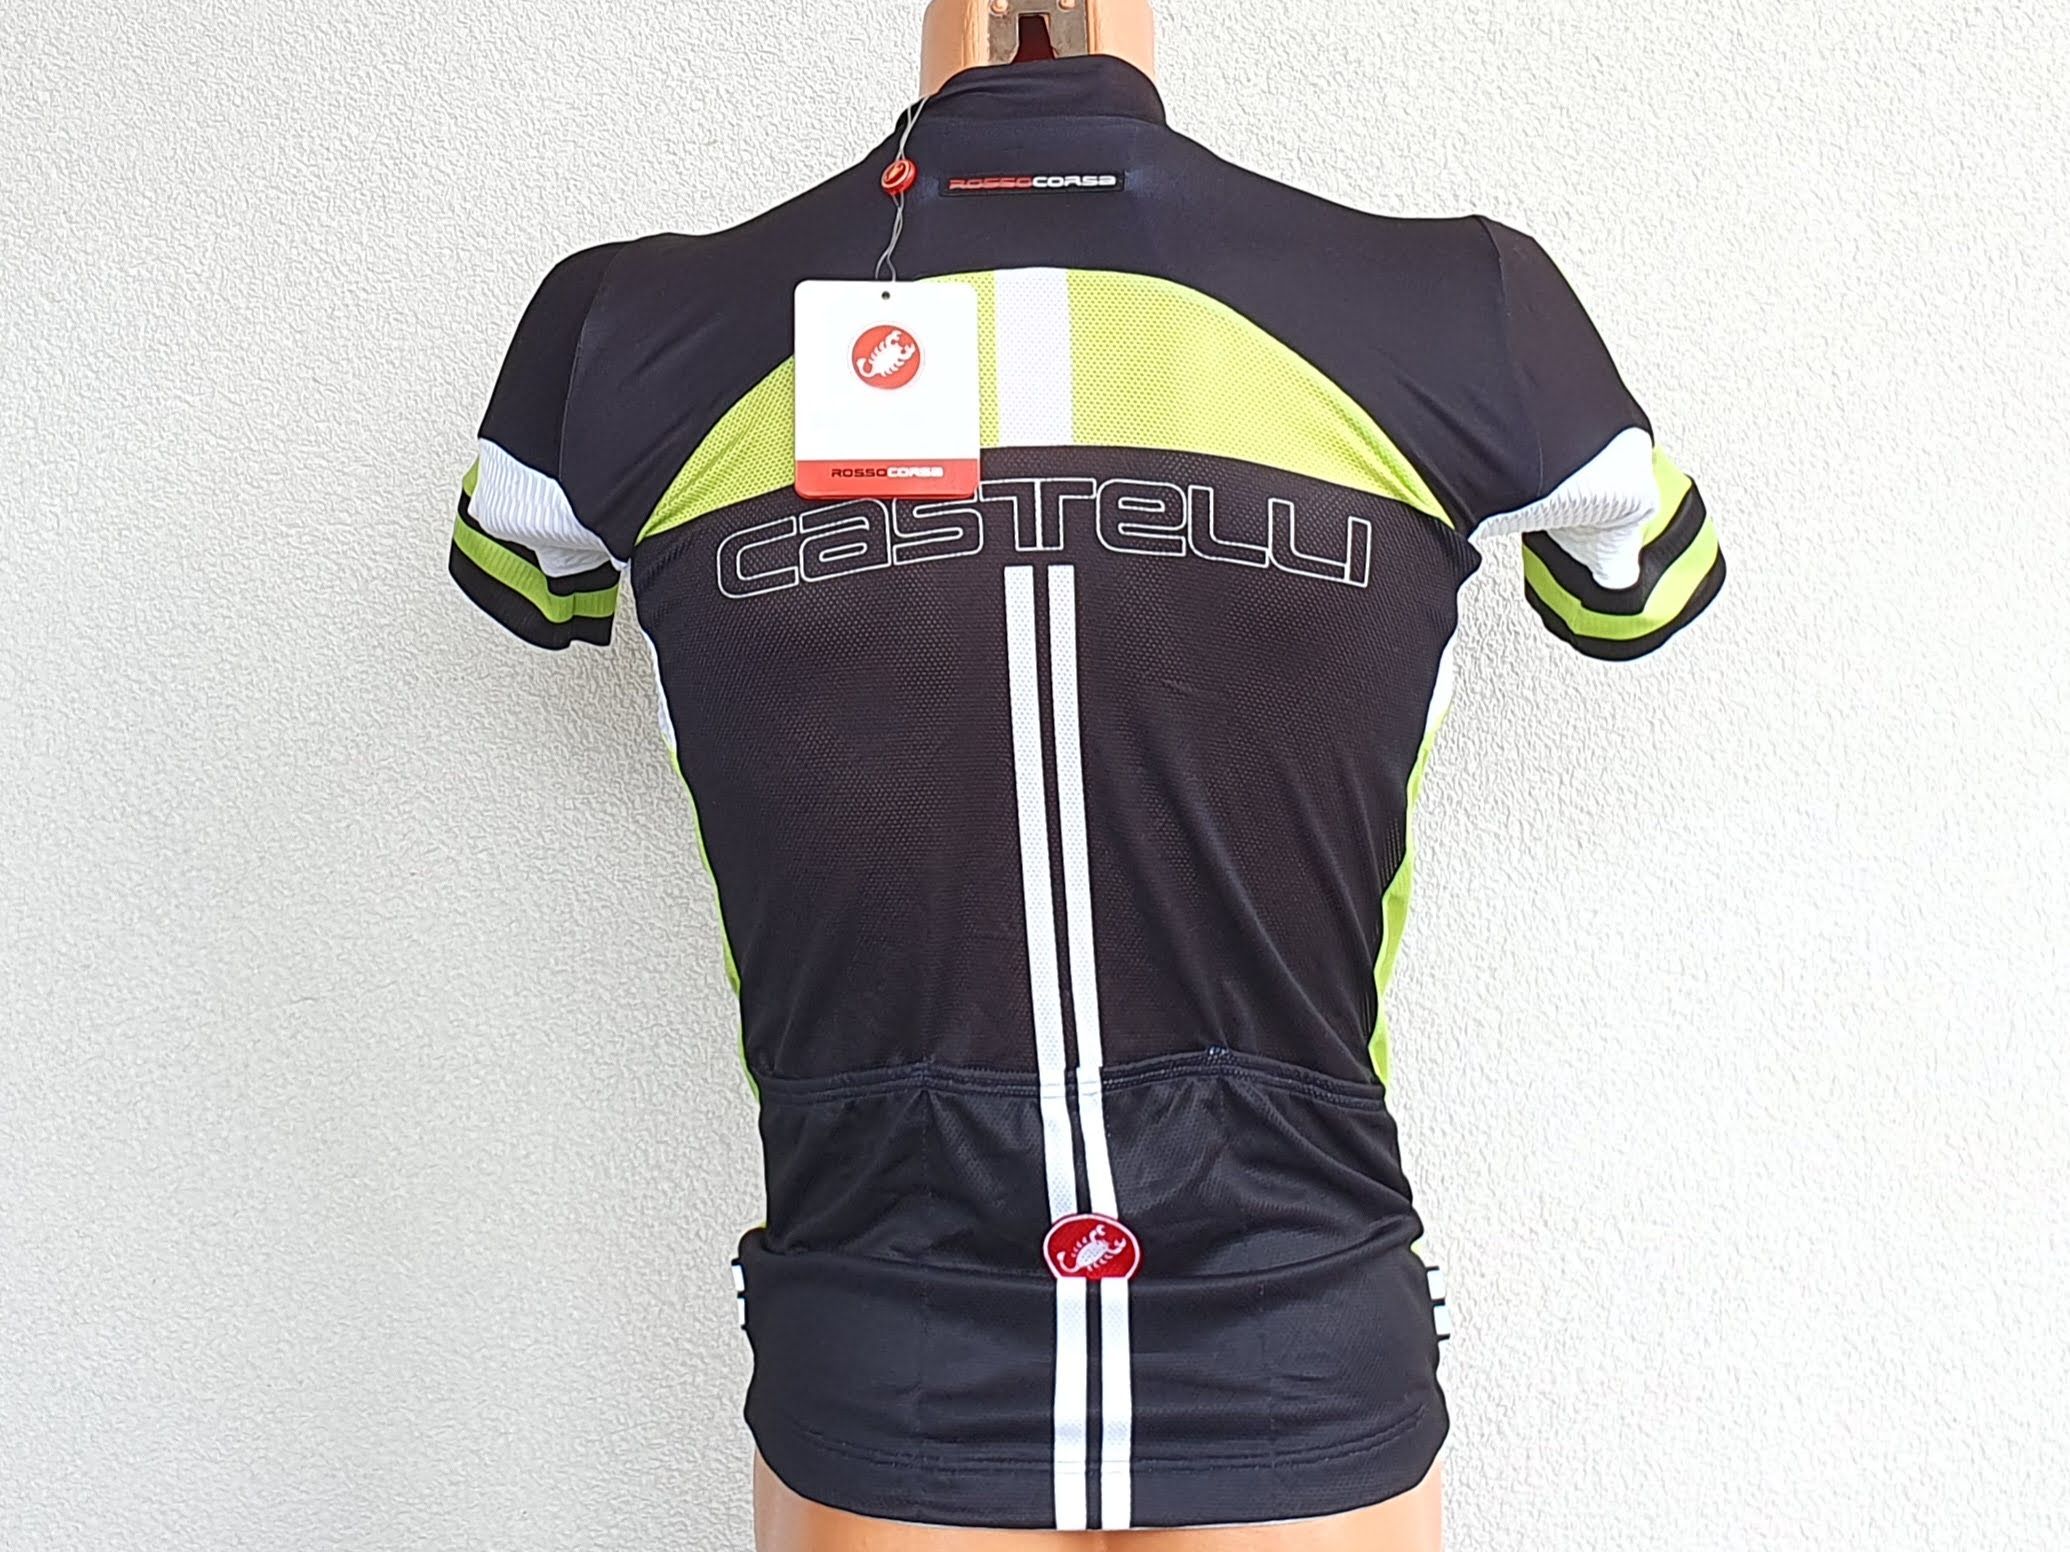 Tricou ciclism,Castelli Free AR 4.0 ,Barbati,Multicolor,Marime M